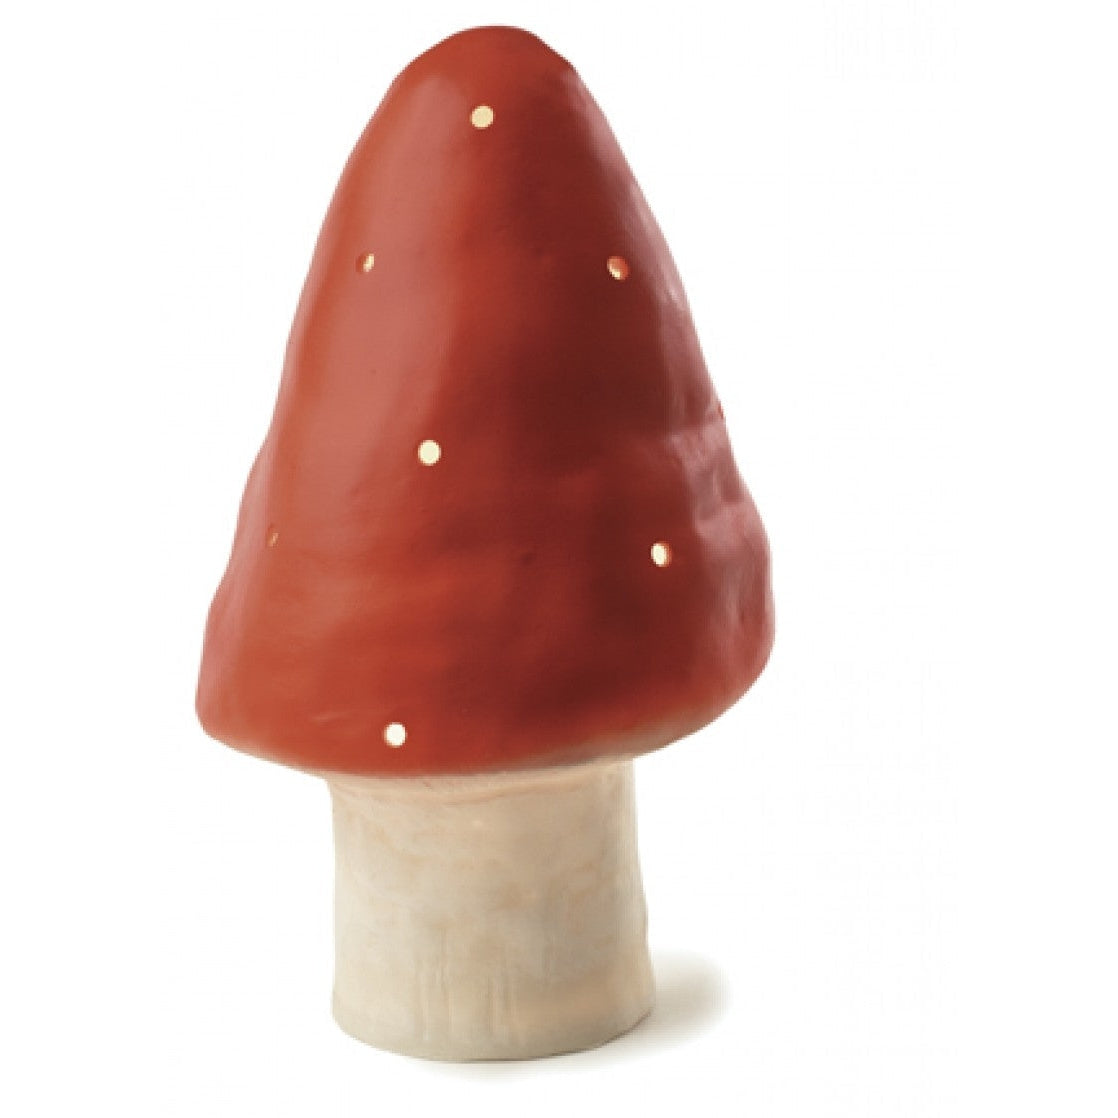 Heico Small Night Light Lamp - Small Red Mushroom